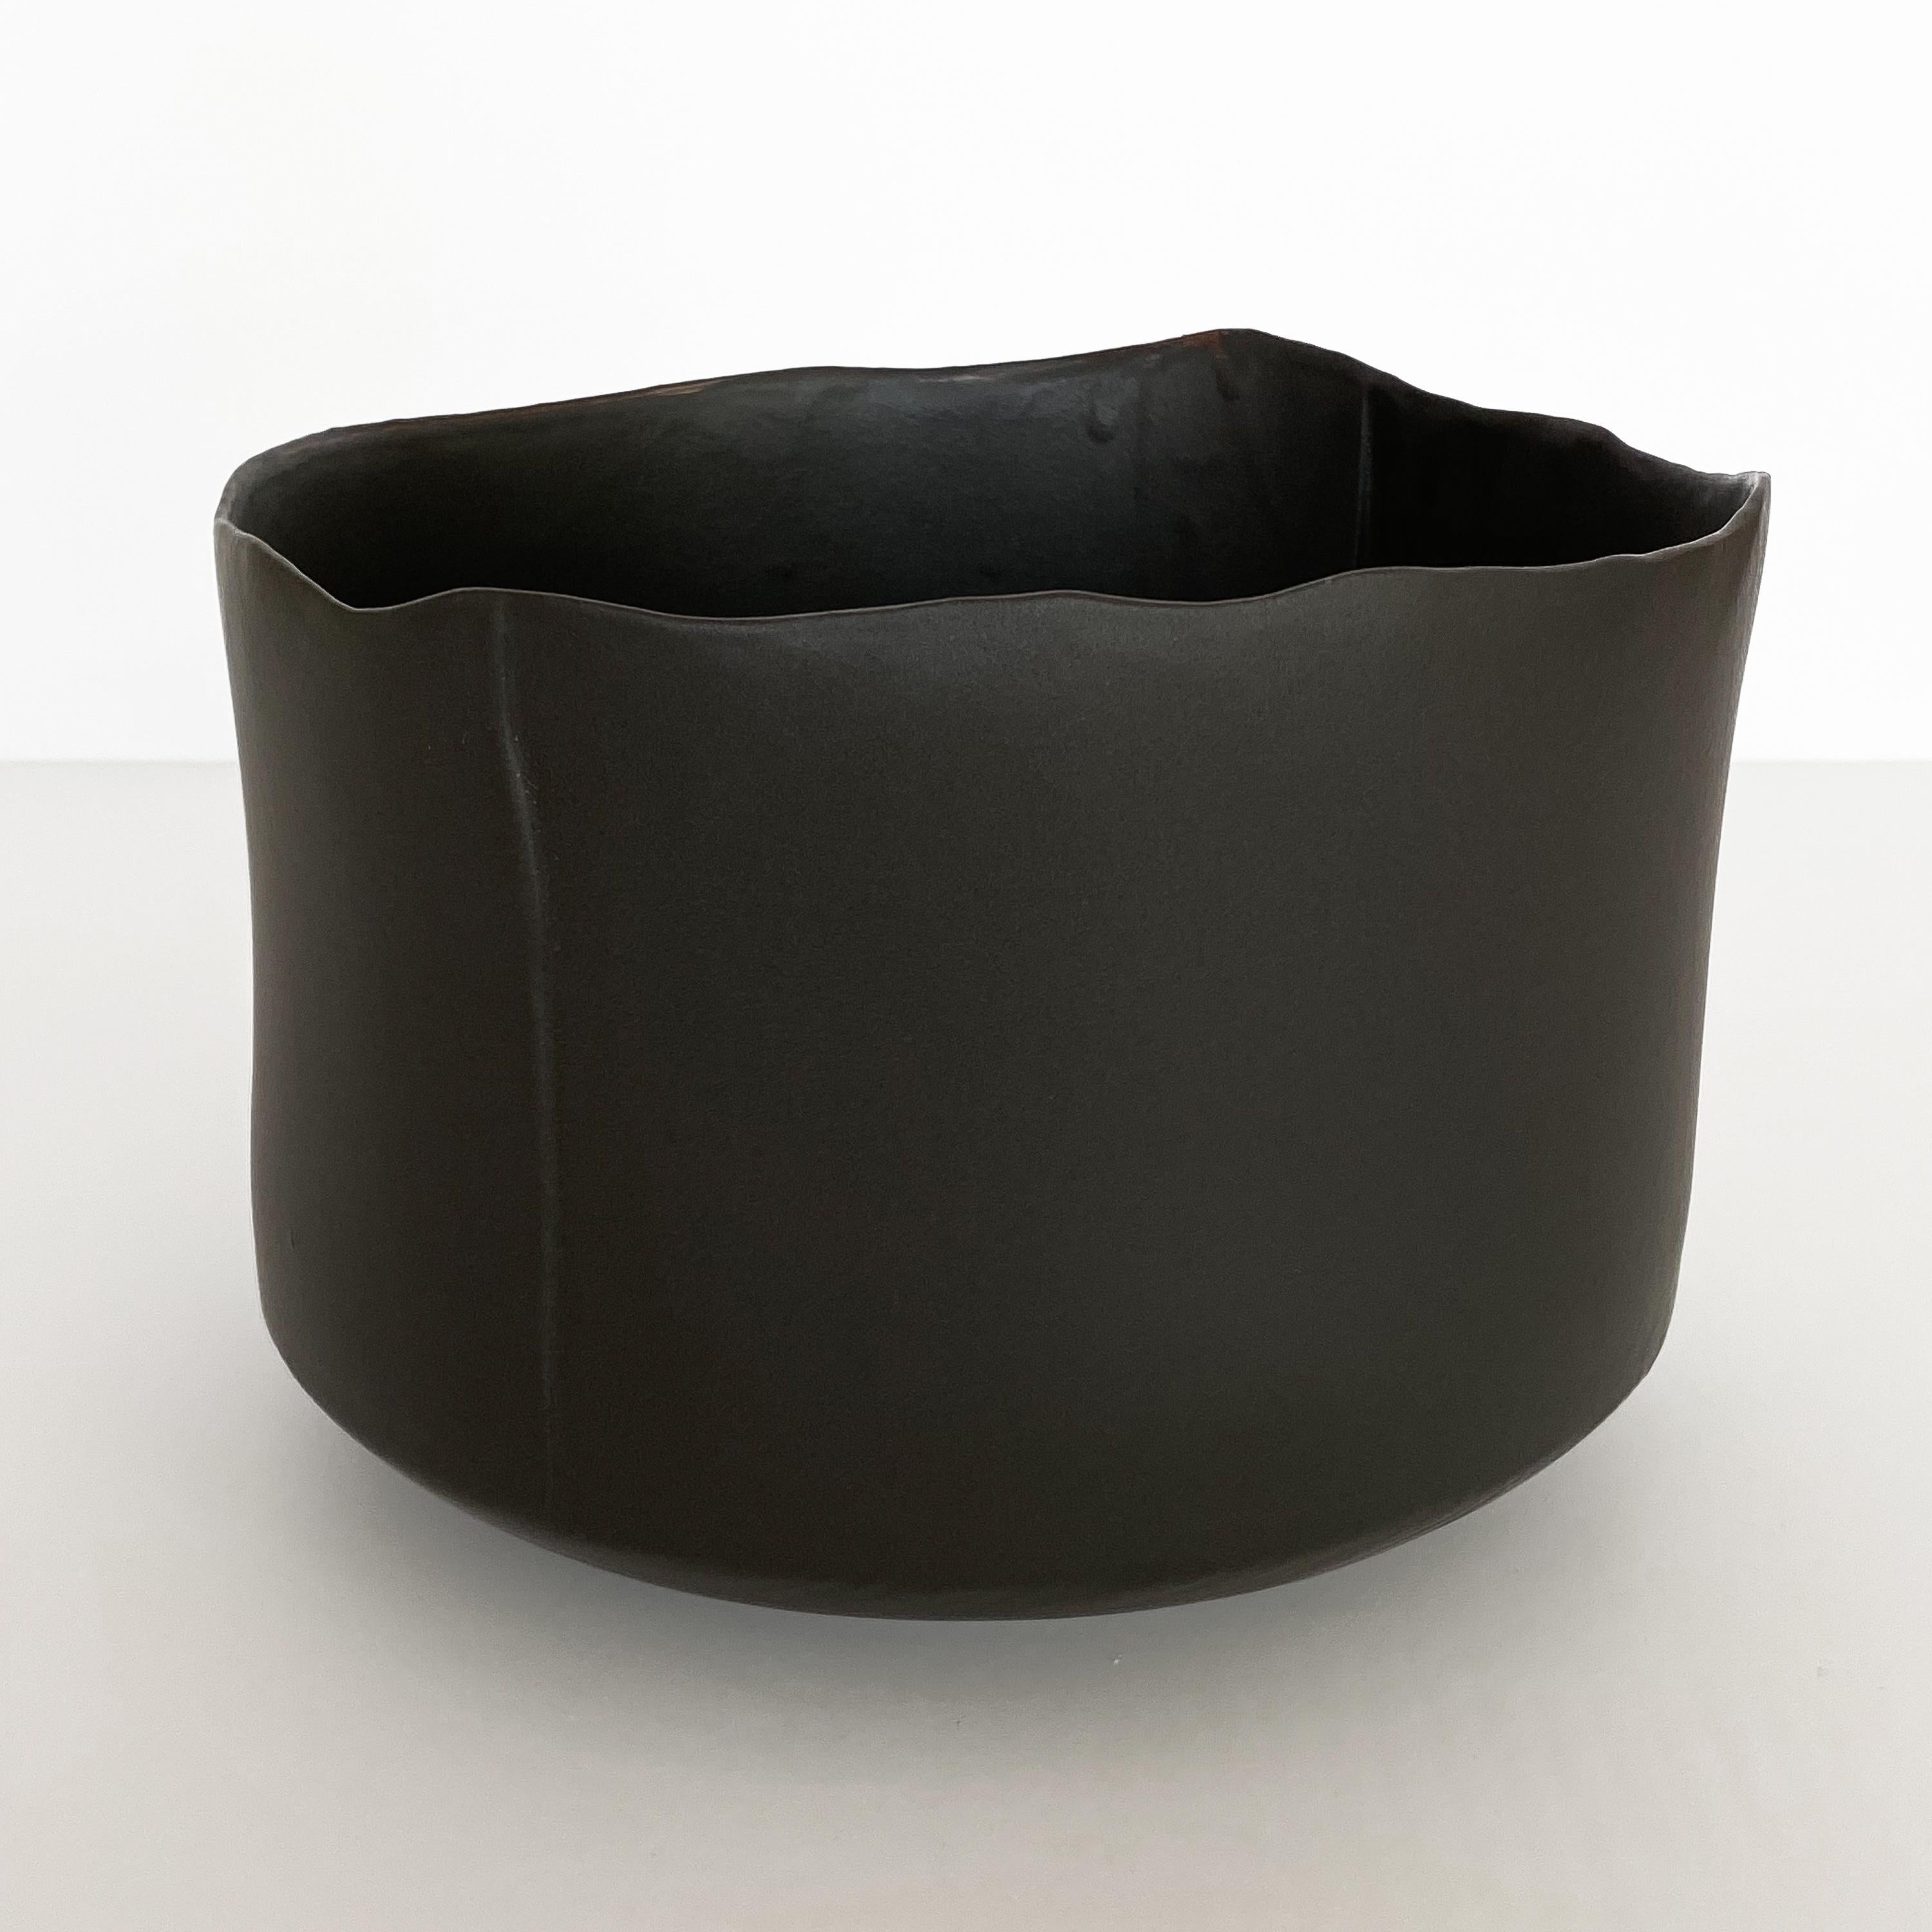 Matte black glazed earthenware bowl by Diana Gillispie. Minimalist and modern in form. Measures: 7